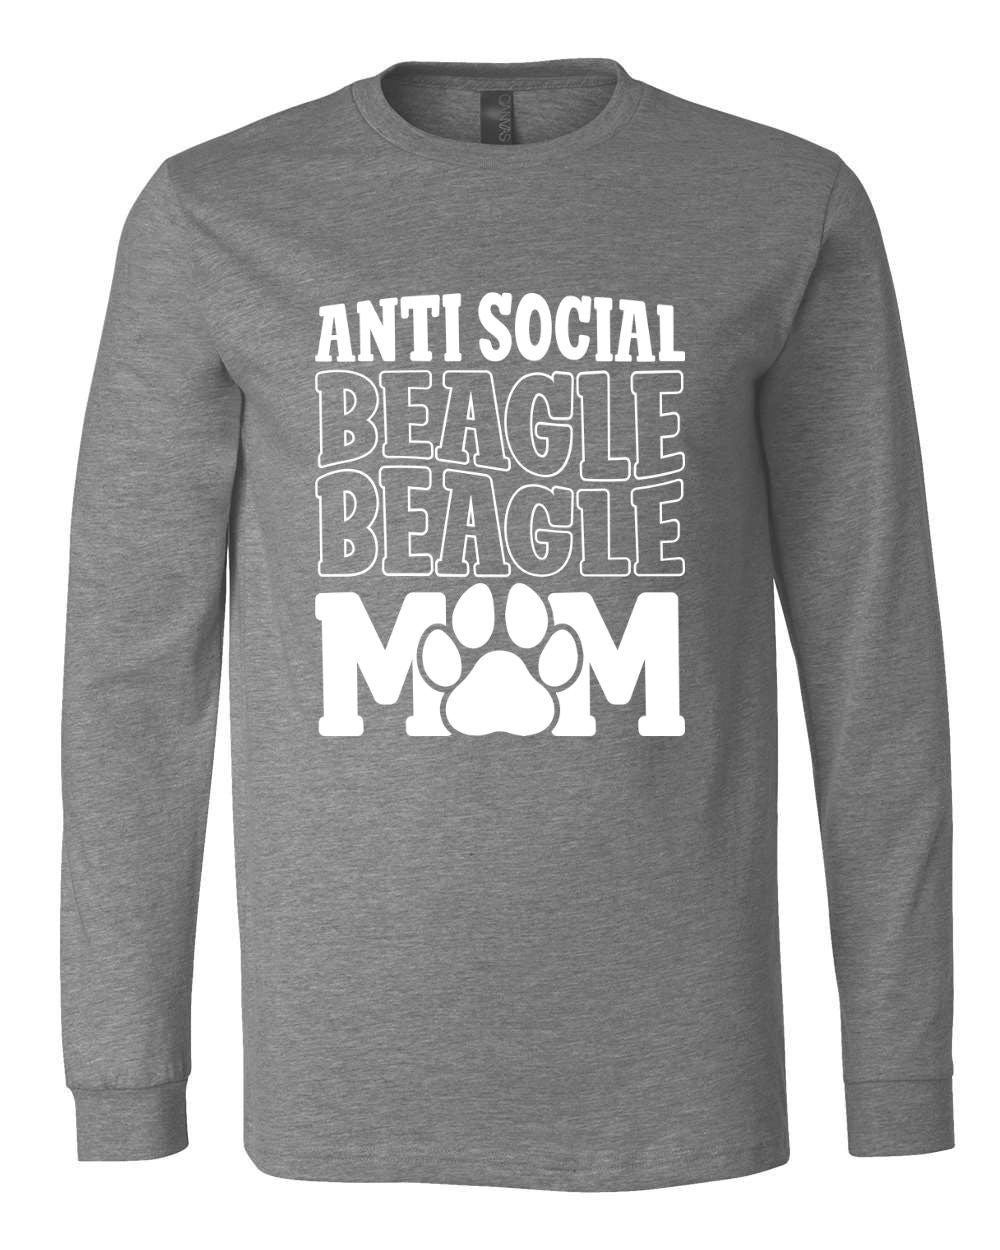 Antisocial Beagle Mom Long Sleeves